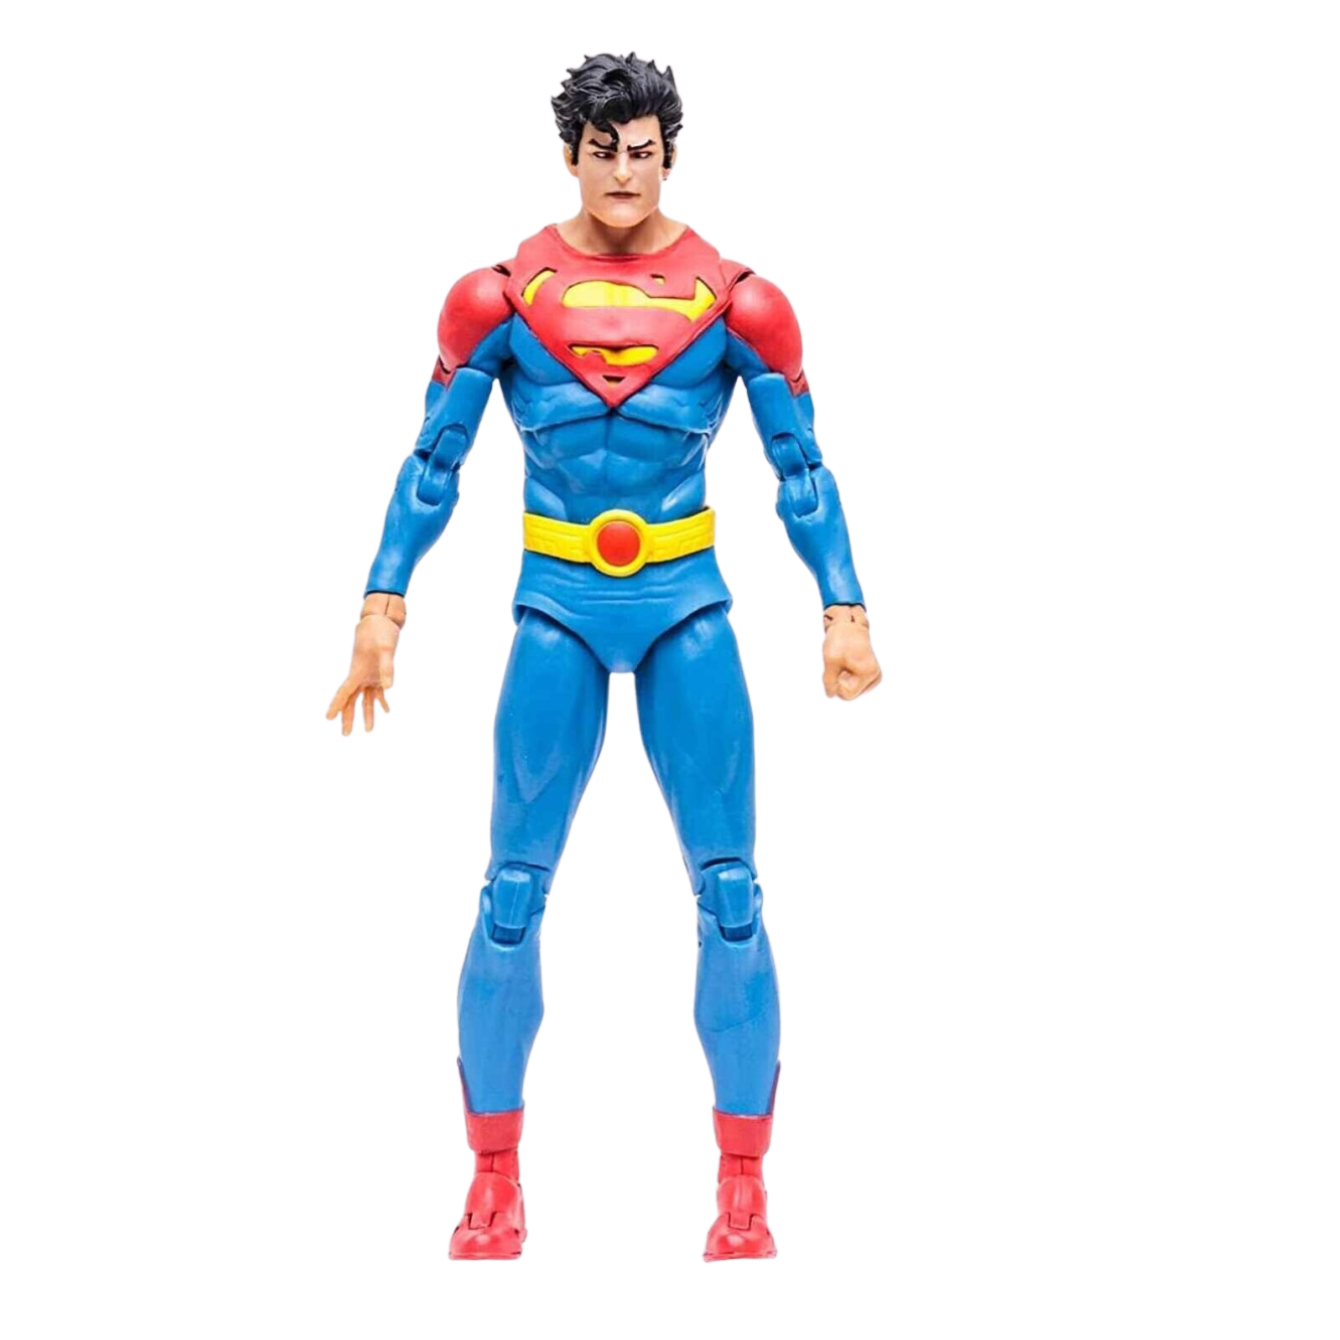 DC Multiverse Superman "Jon Kent"